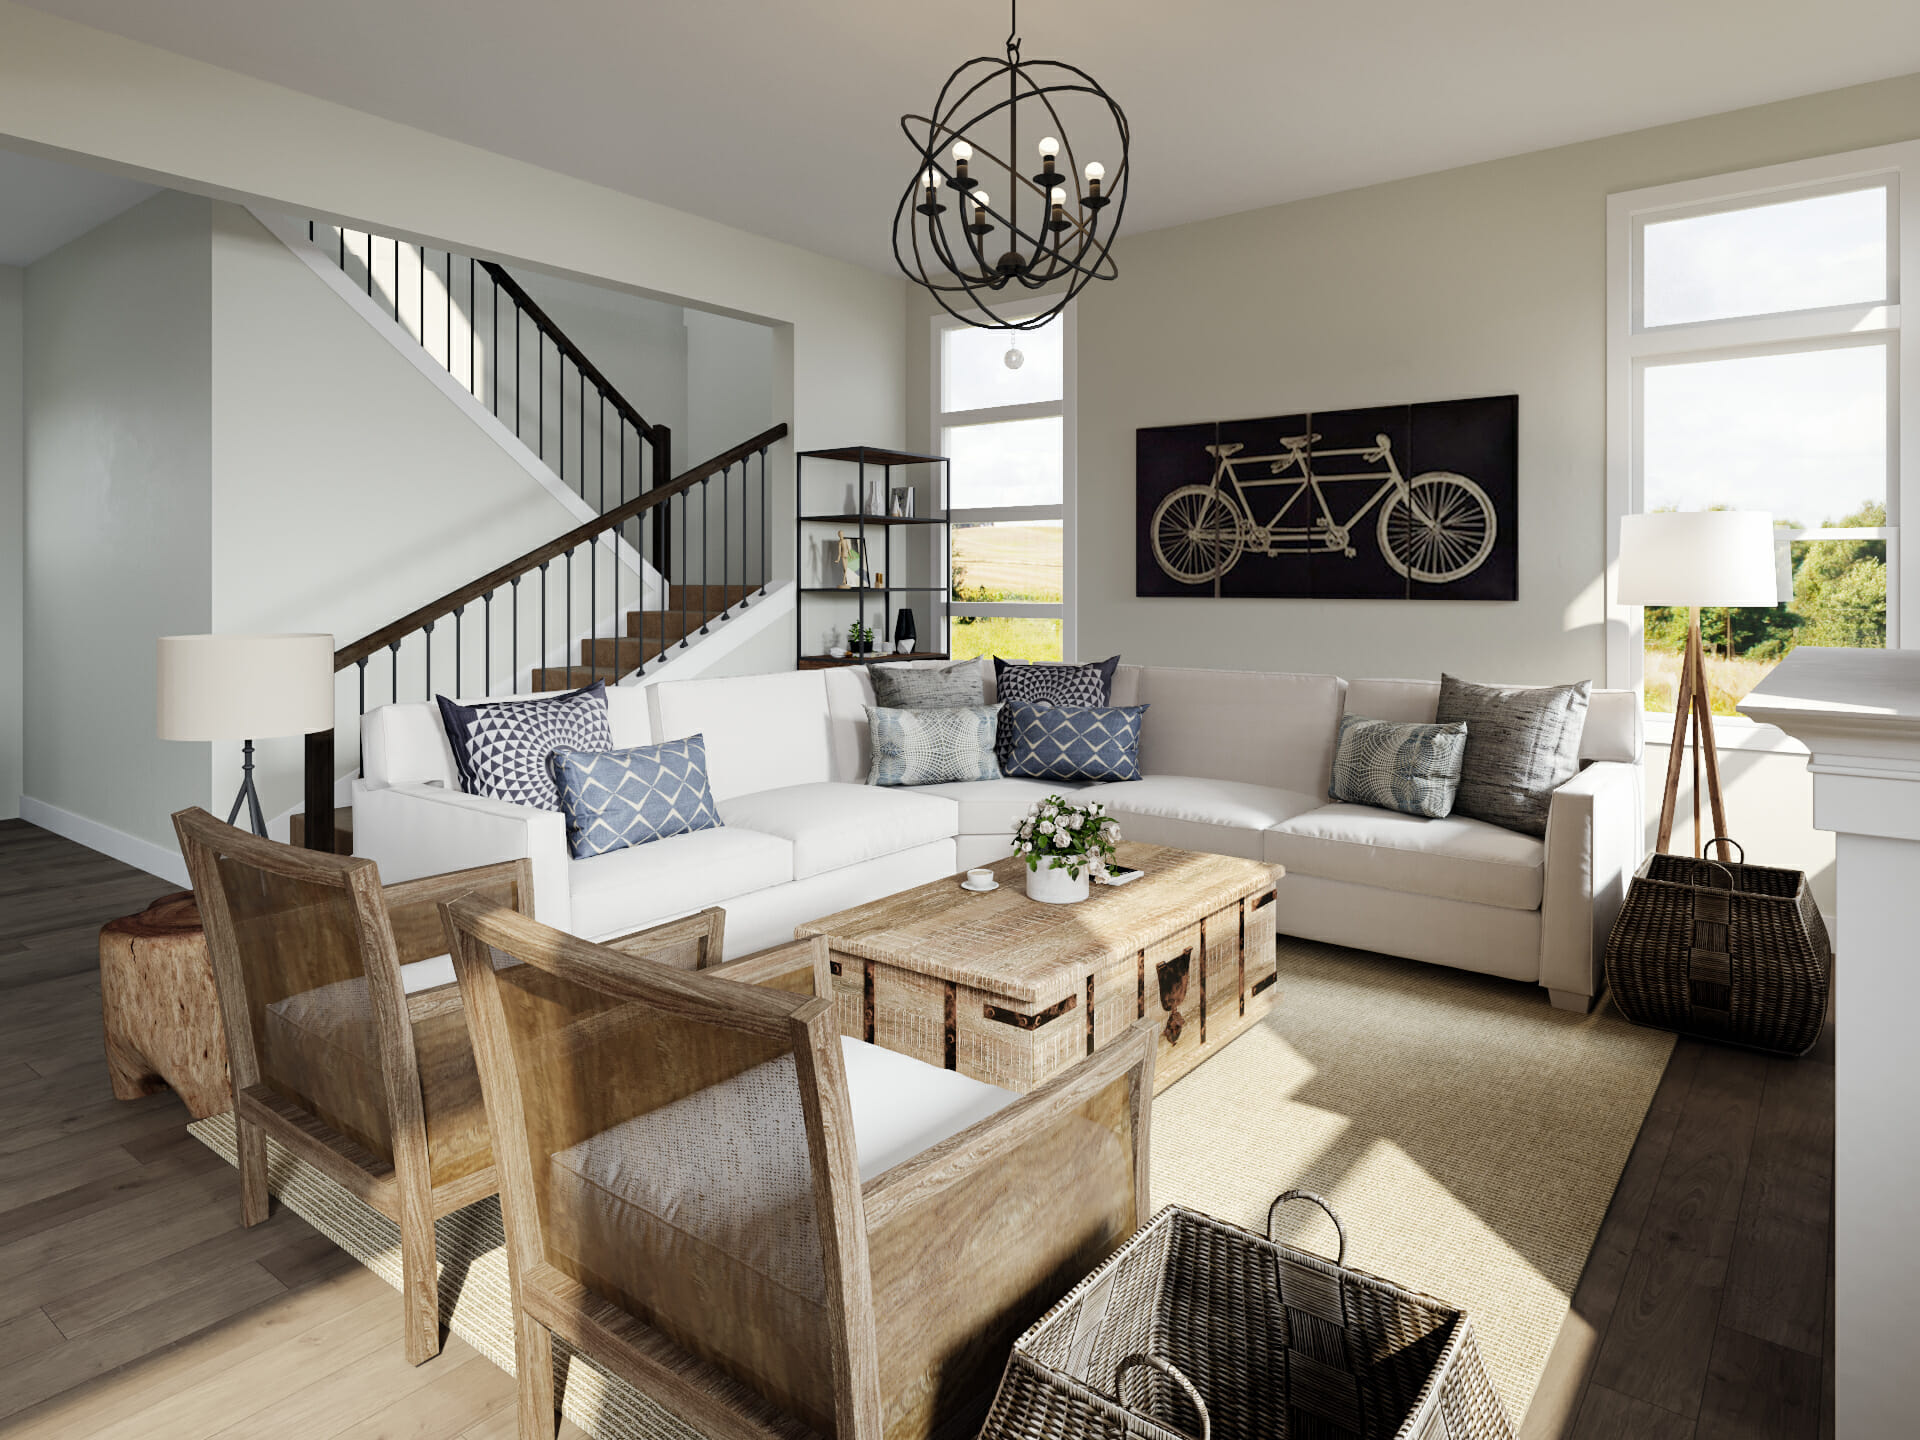 Top Living Room Ideas Modern Rustic - Best Home Design